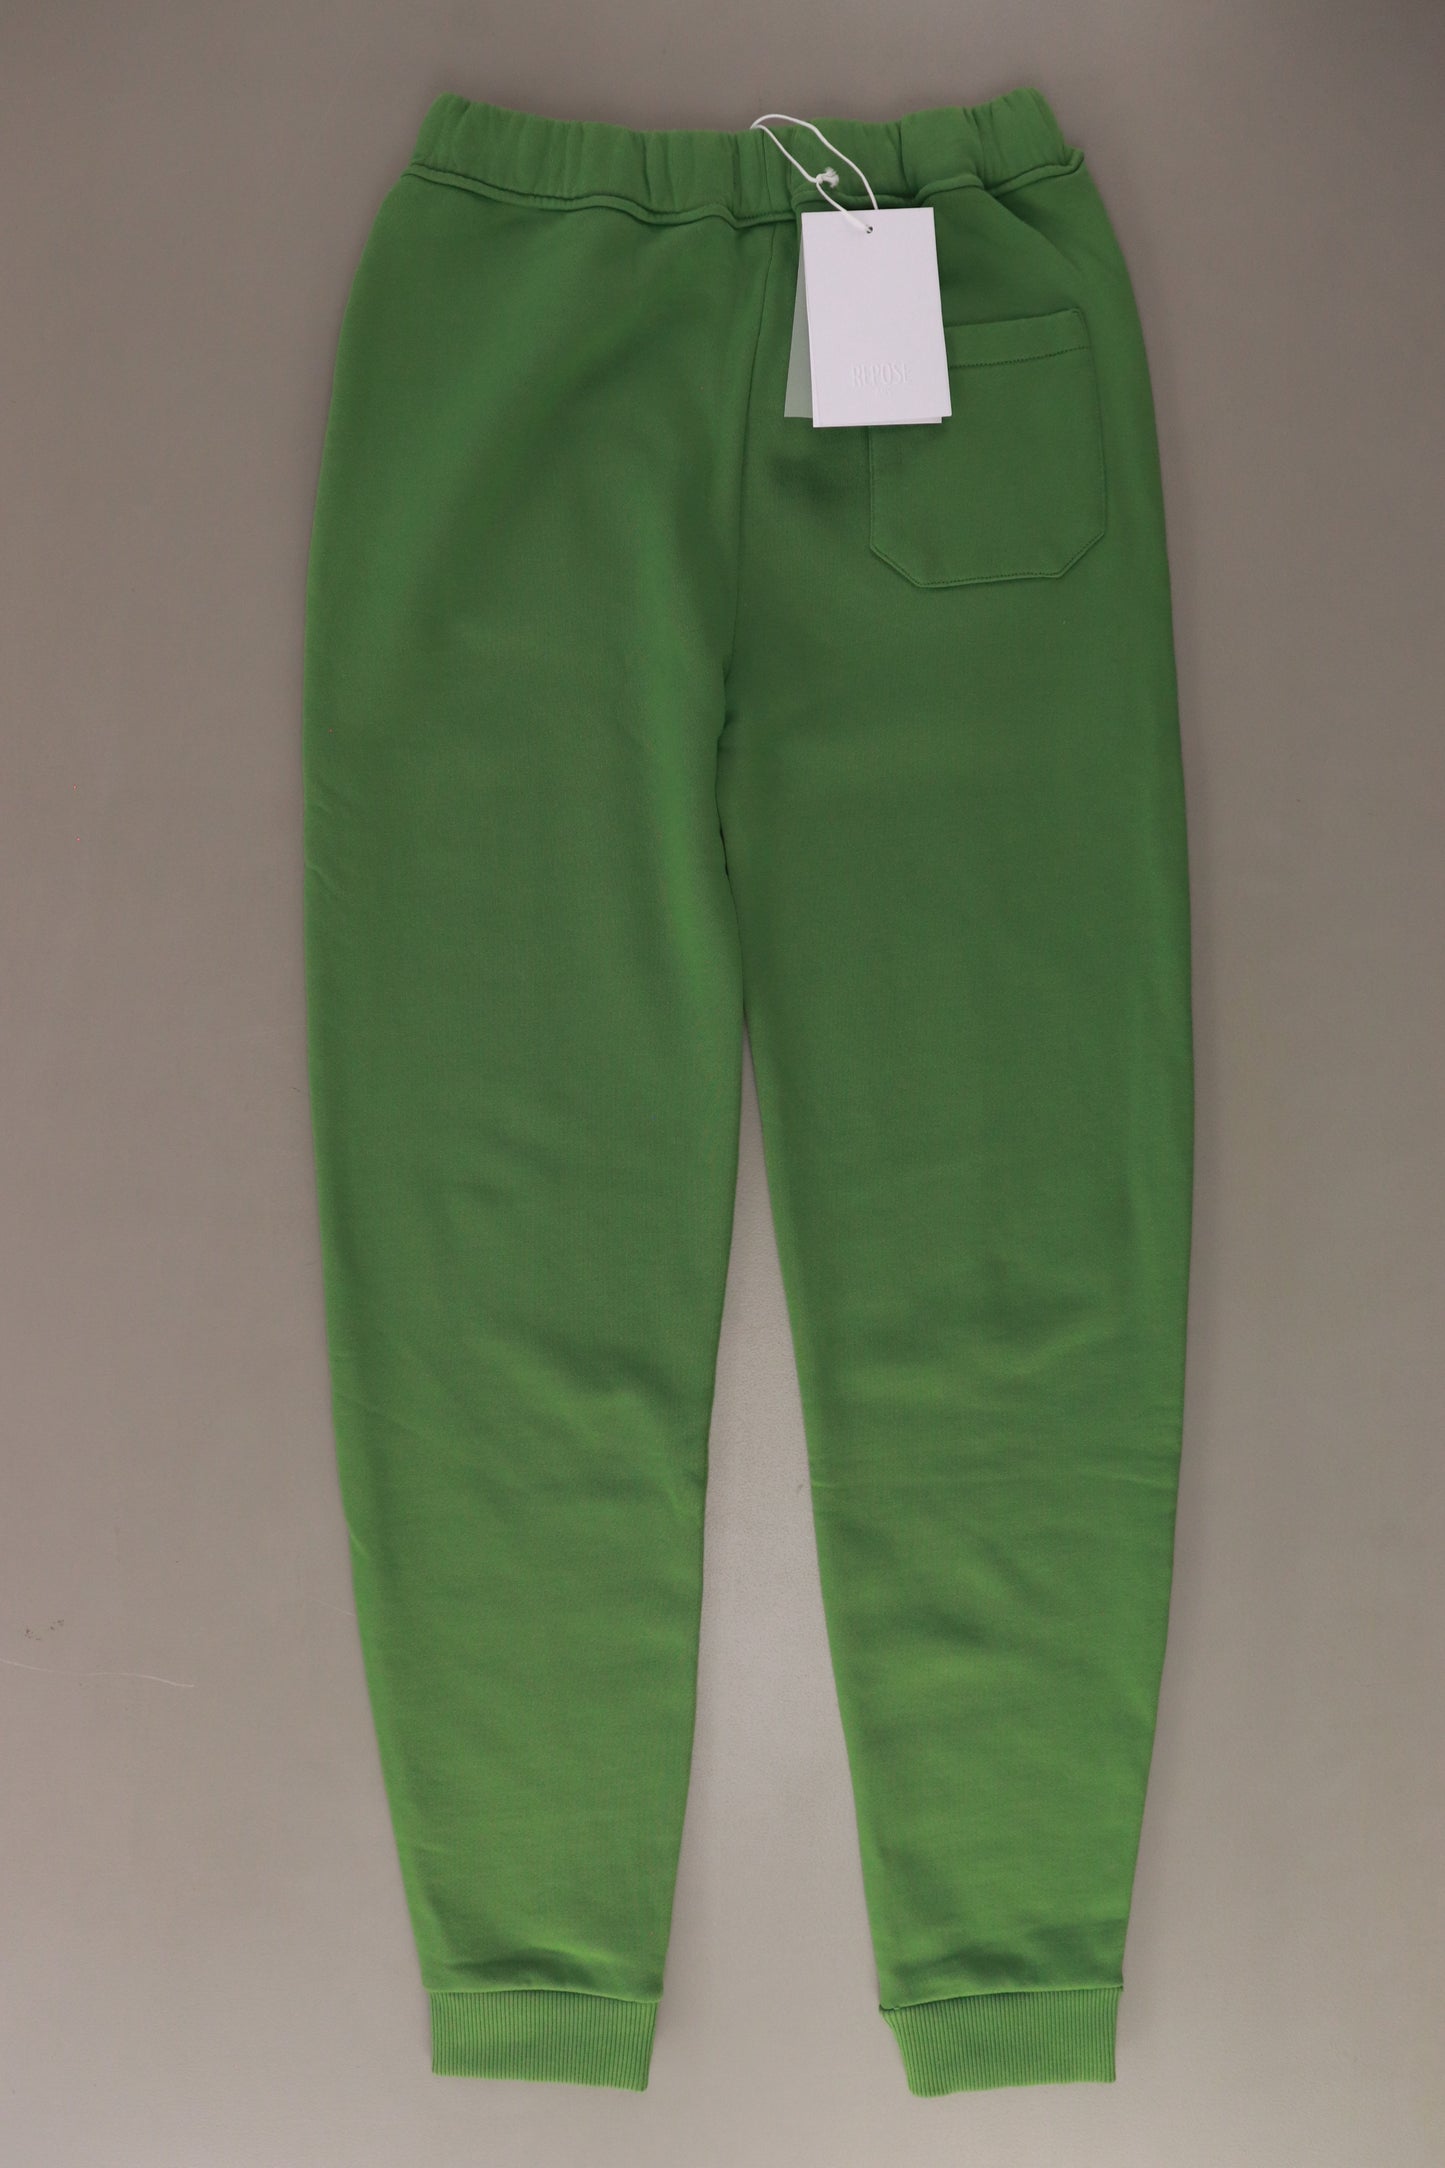 Repose AMS Kinder Jogginghose "hunter green" grün Größe 12 Jahre, 152 - 156 cm neu mit Etikett